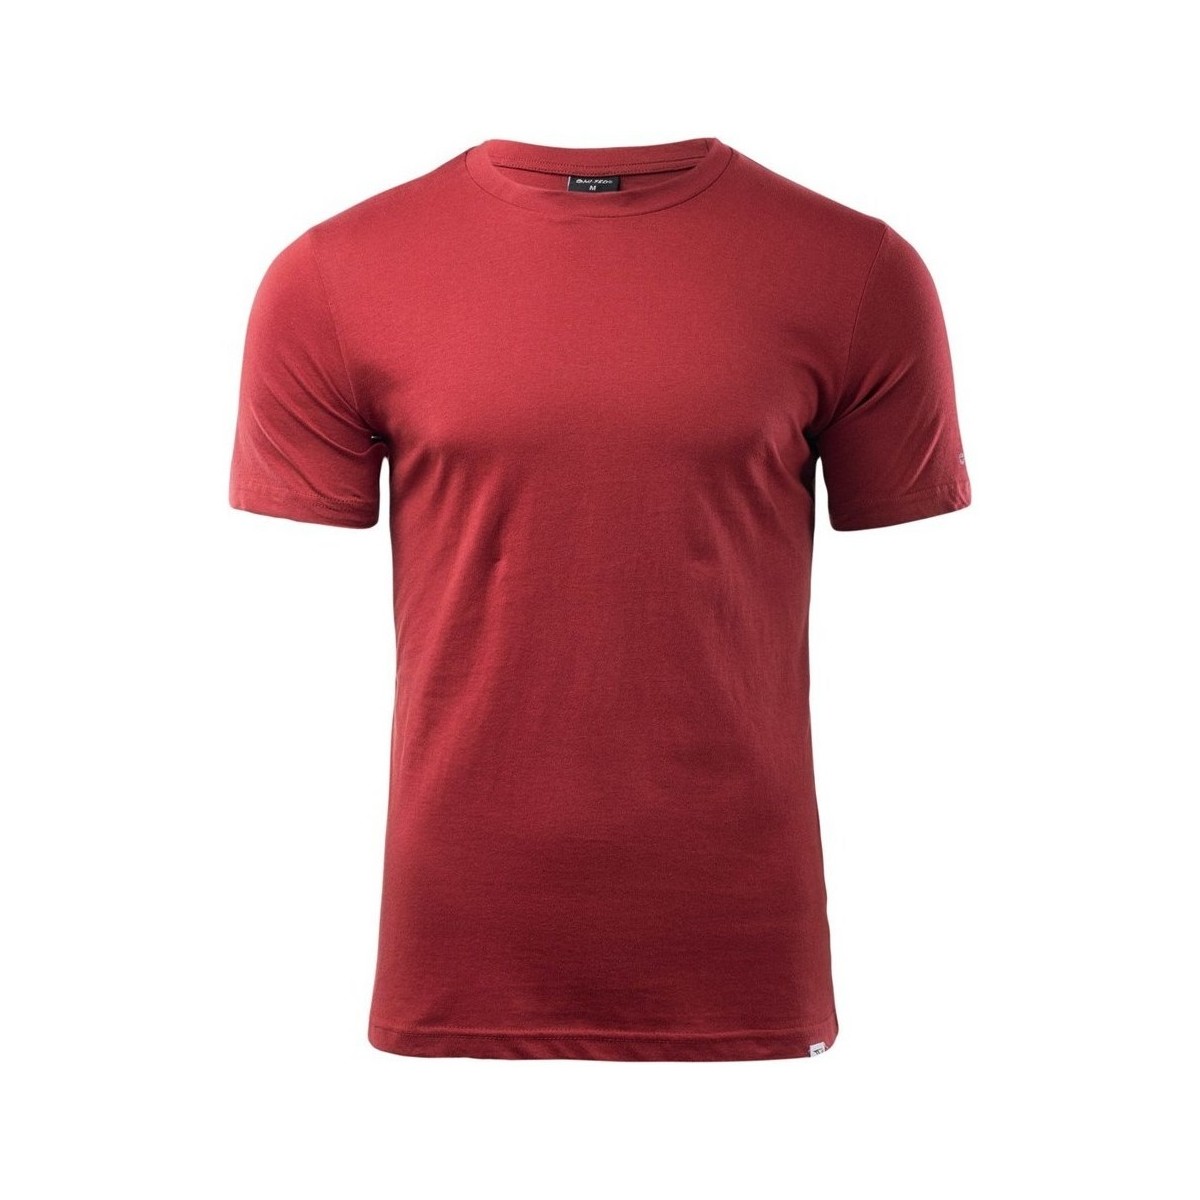 Textiel Heren T-shirts korte mouwen Hi-Tec Puro Bordeaux